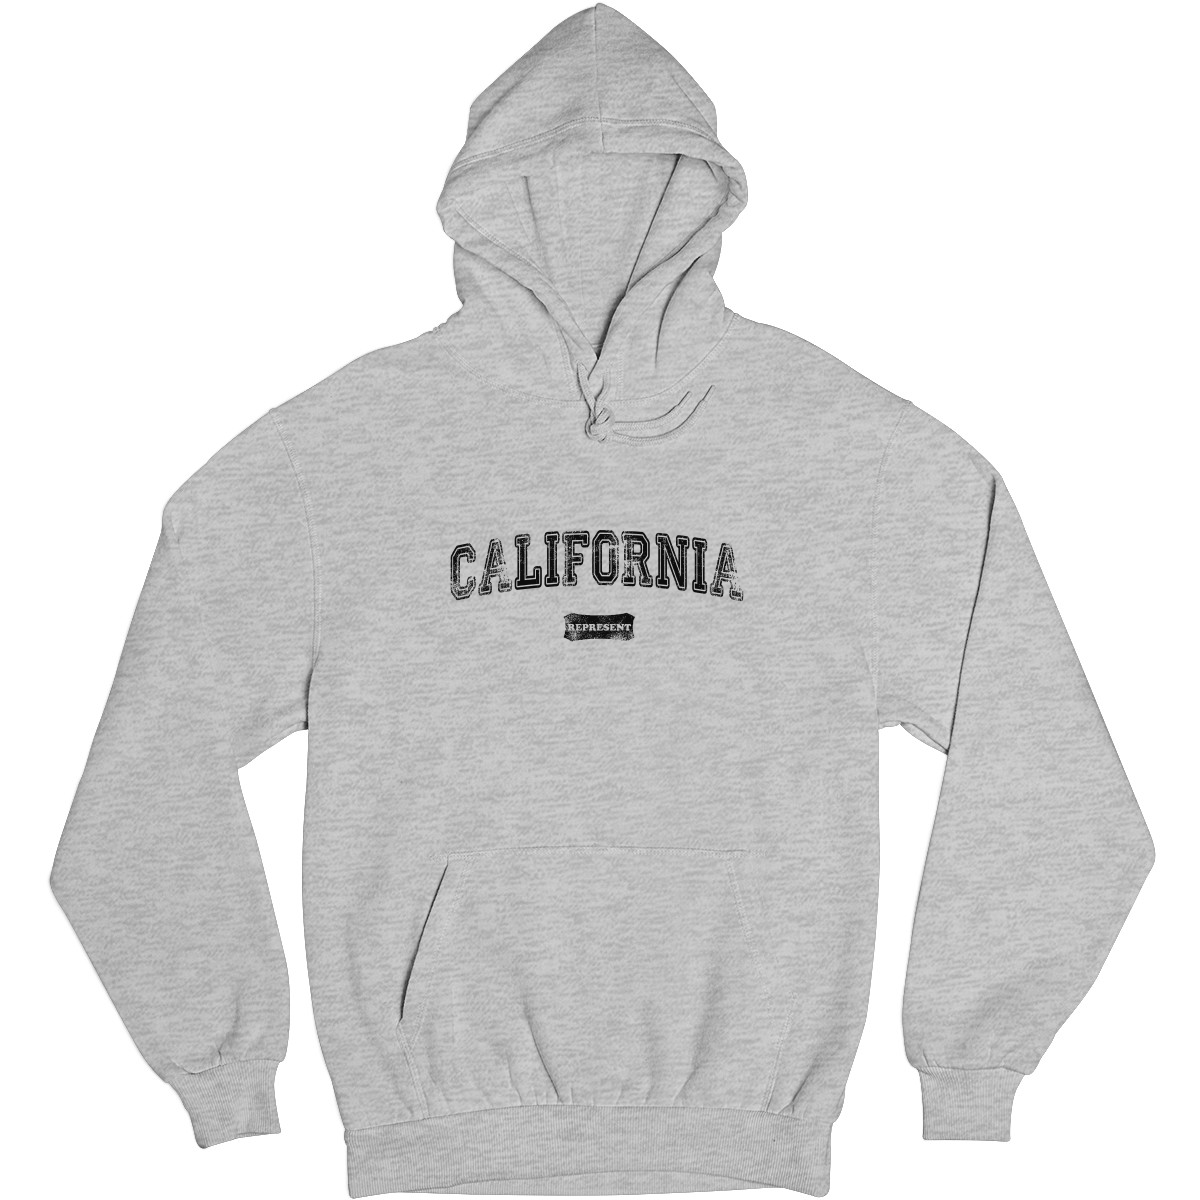 California Represent Unisex Hoodie | Gray